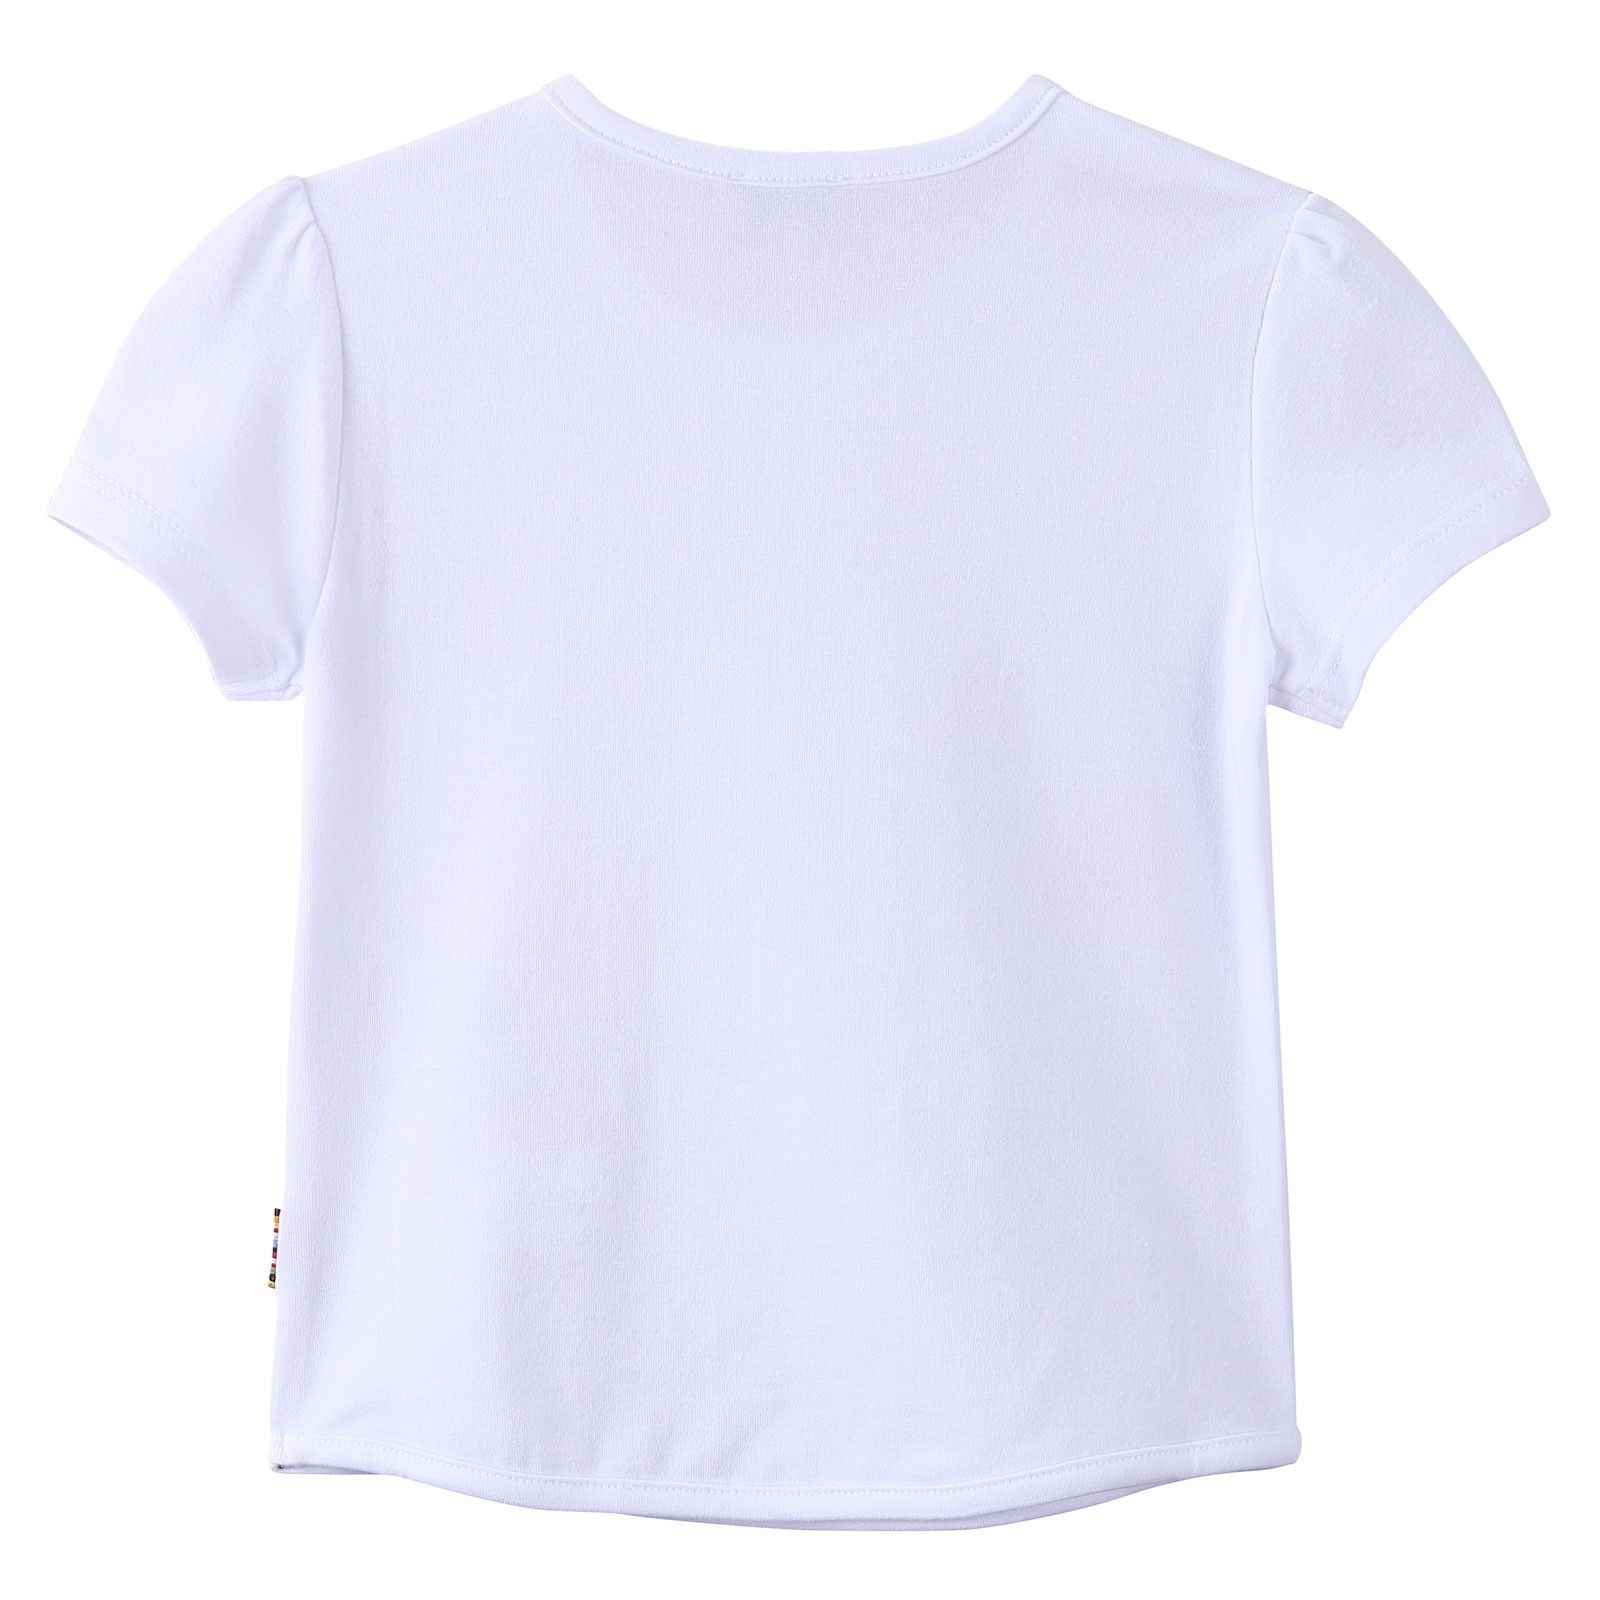 Girls White Cotton T-Shirt With Multicolor 'LOVE' Print - CÉMAROSE | Children's Fashion Store - 2